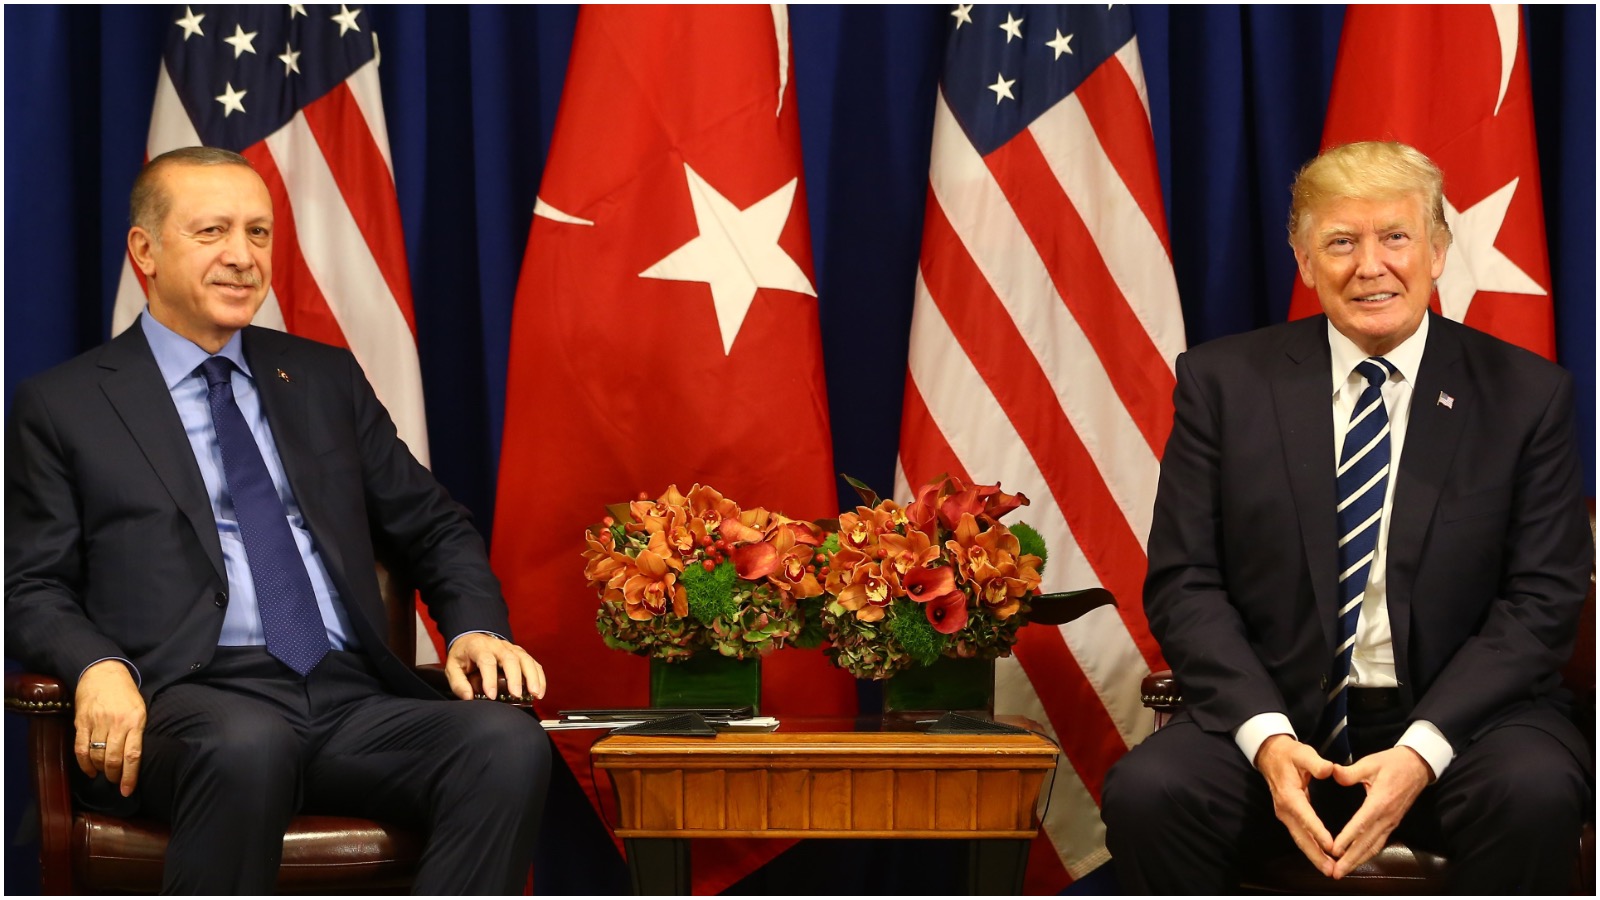 Ferhat Gurini om Tyrkiet og USA: Mistro, uforenelige dagsordener og korruption kan have uforudsete konsekvenser